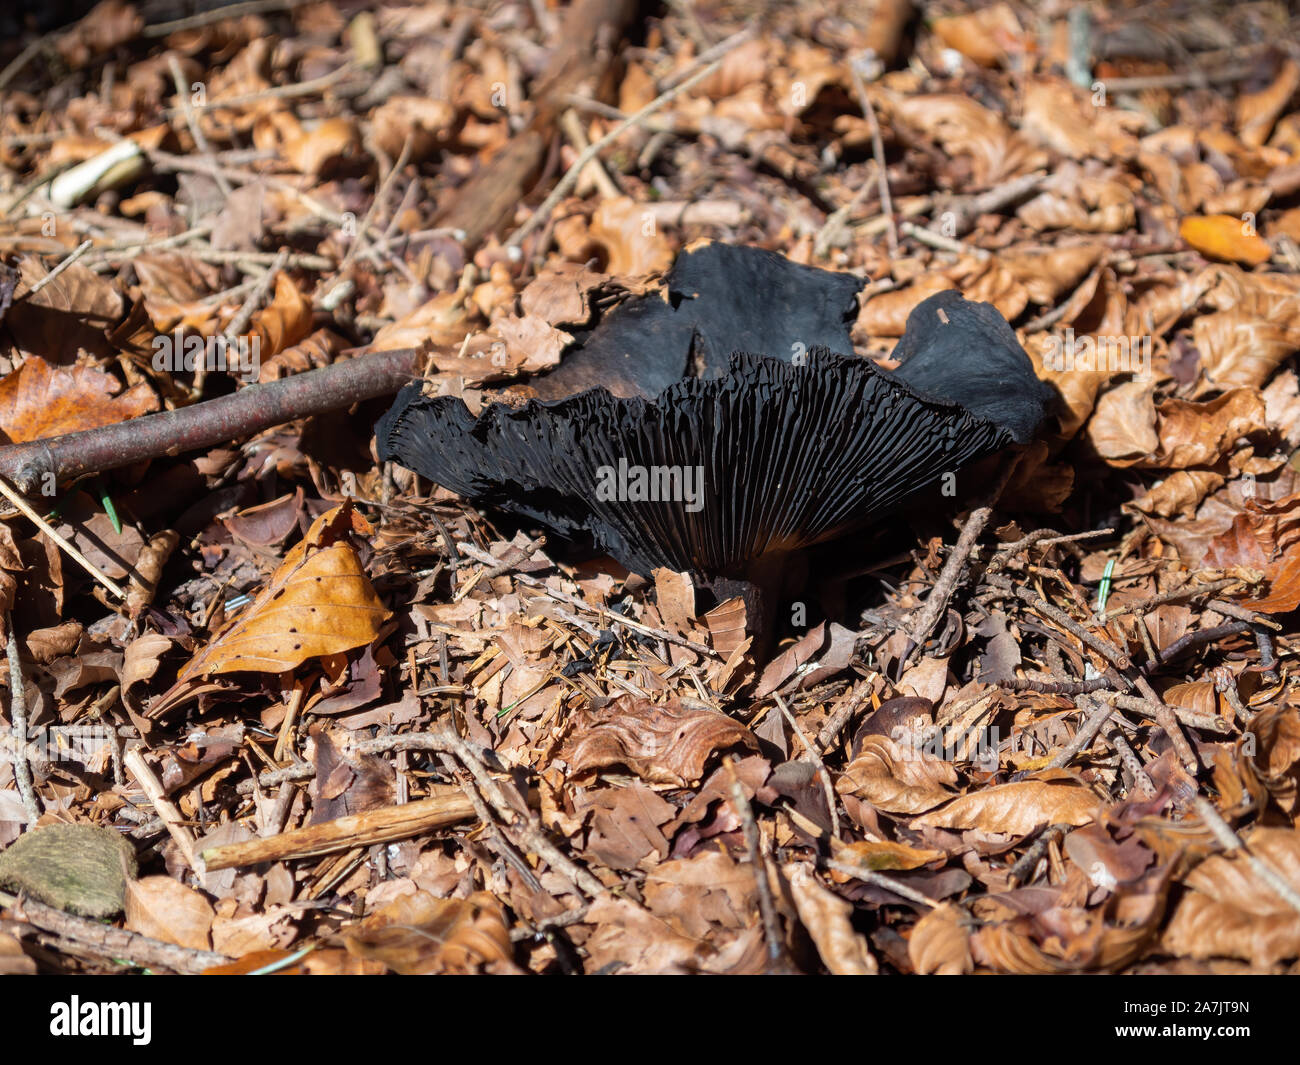 Large black European gilled mushroom in woodland. Probably Russula nigricans, aka Blackening brittlegill or Blackening russula. Stock Photo